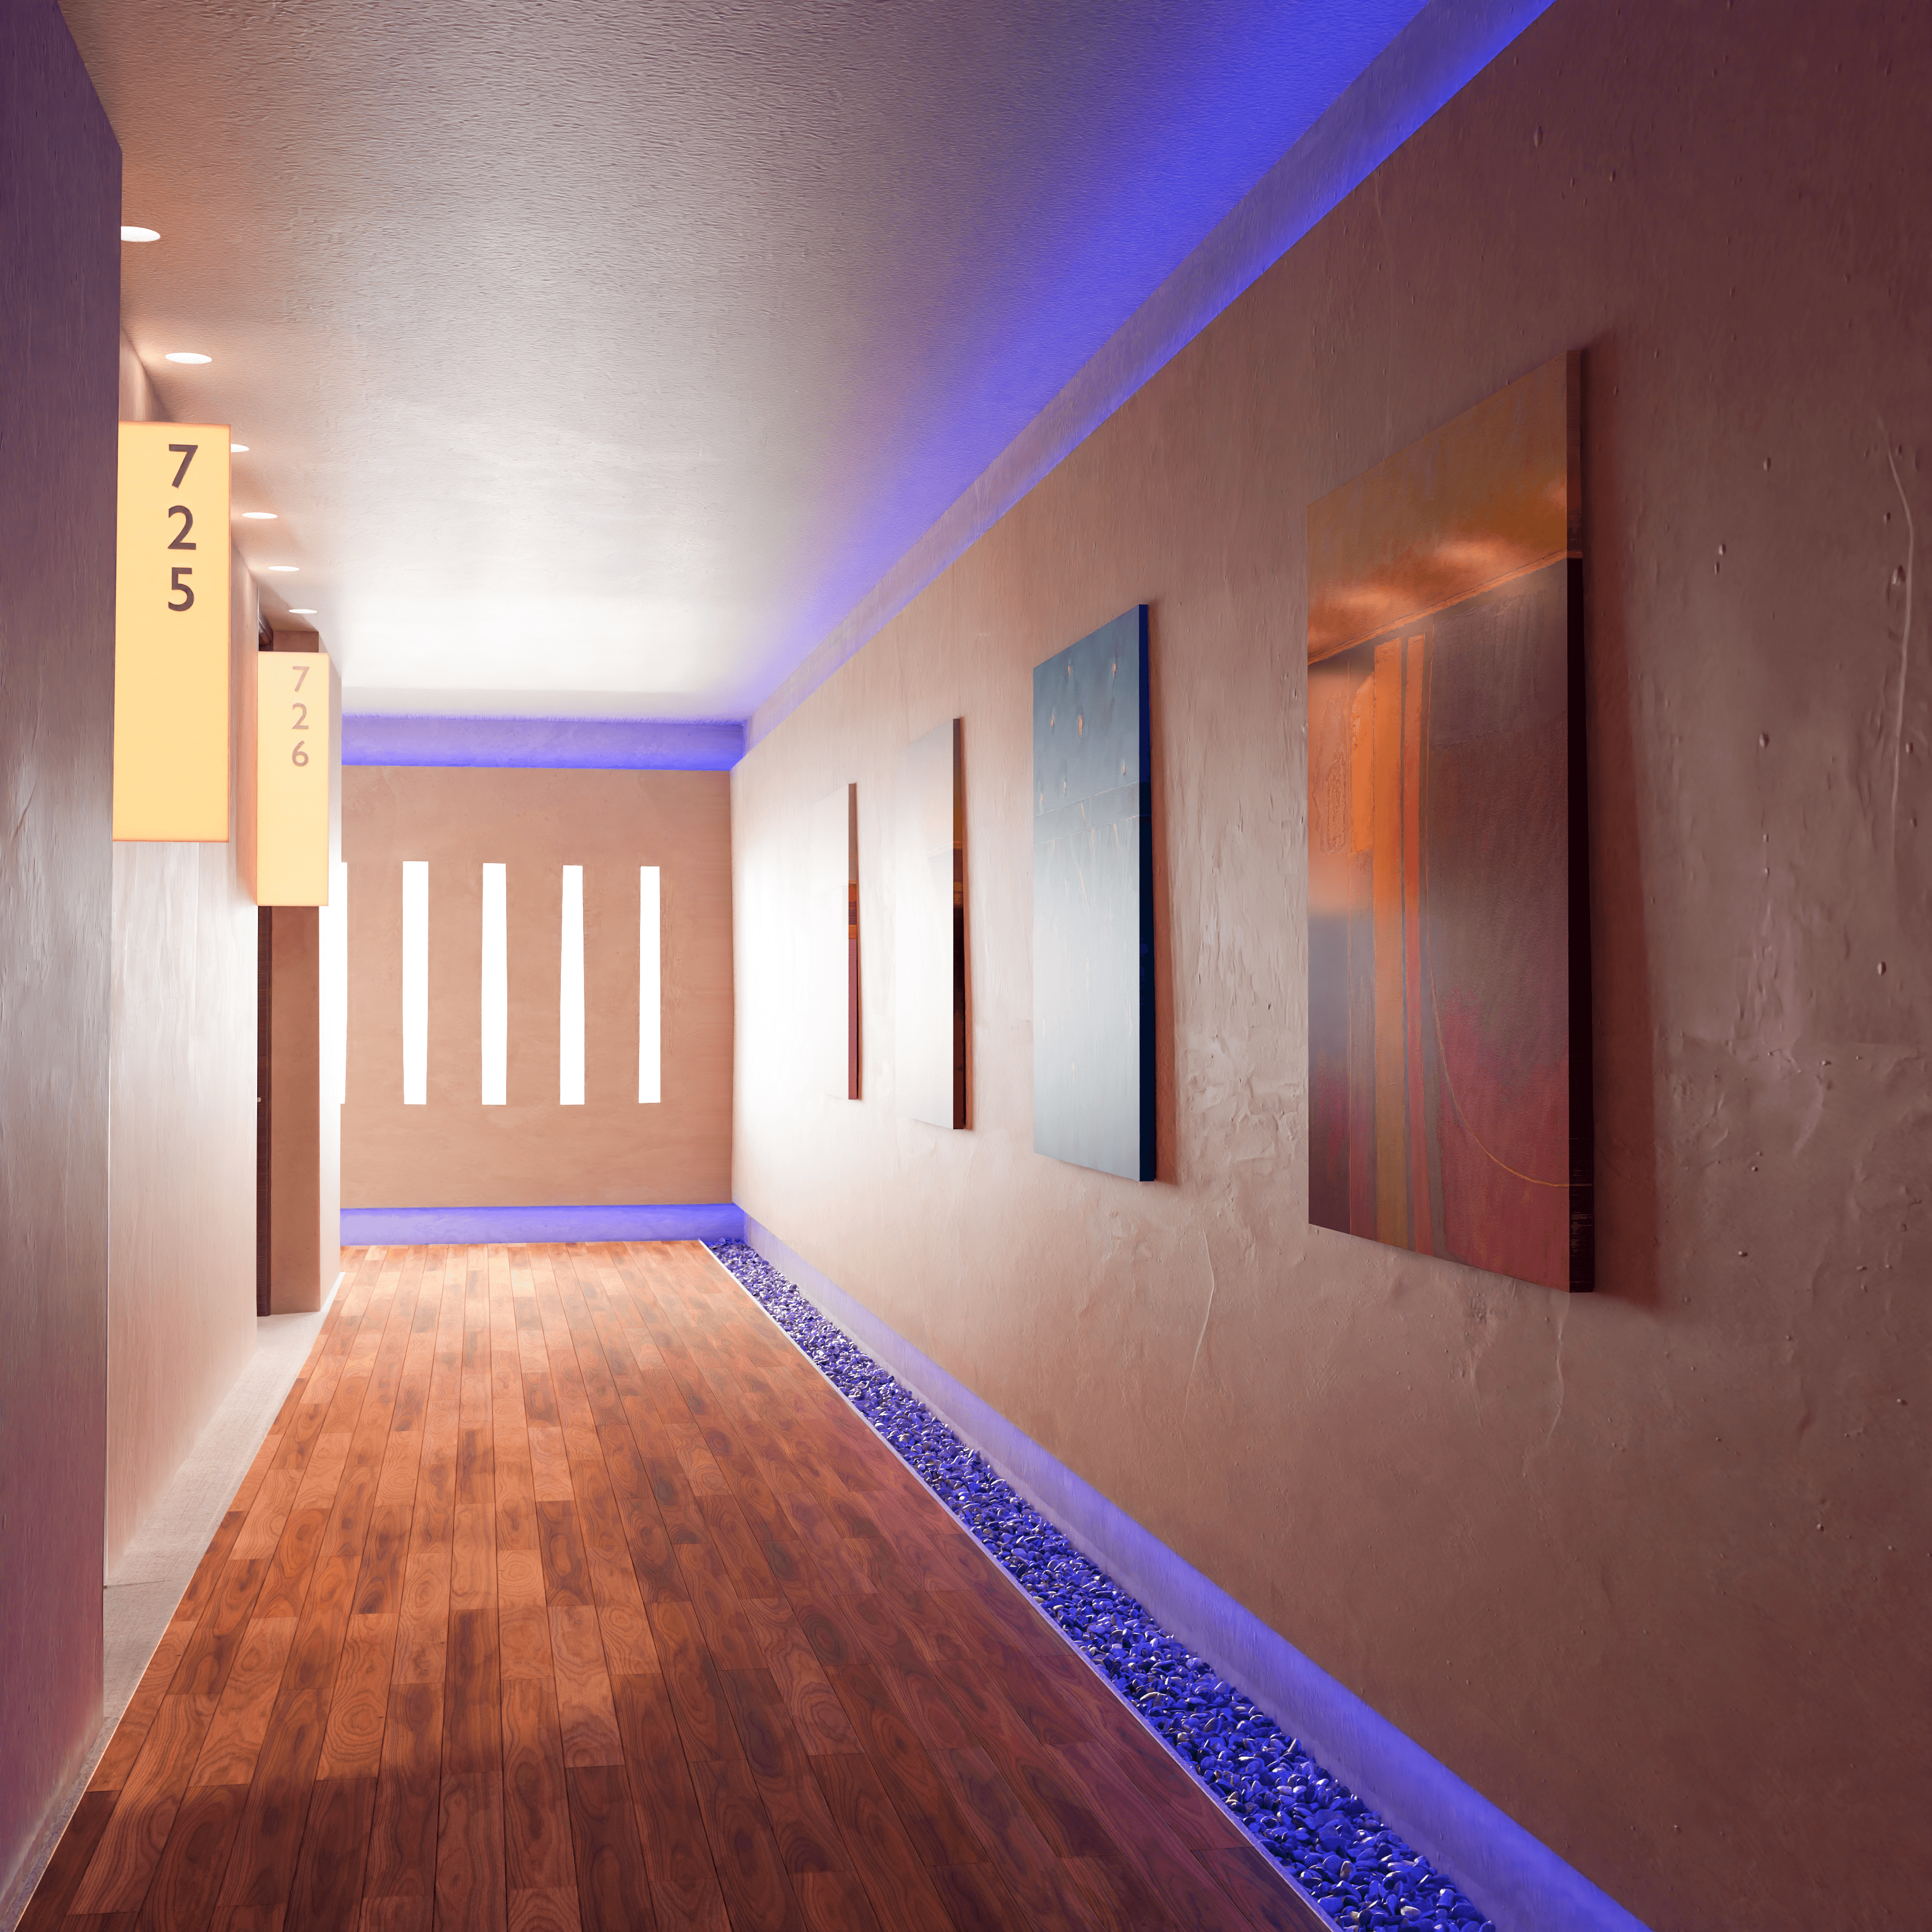 8080-Vast_cove_hallway image